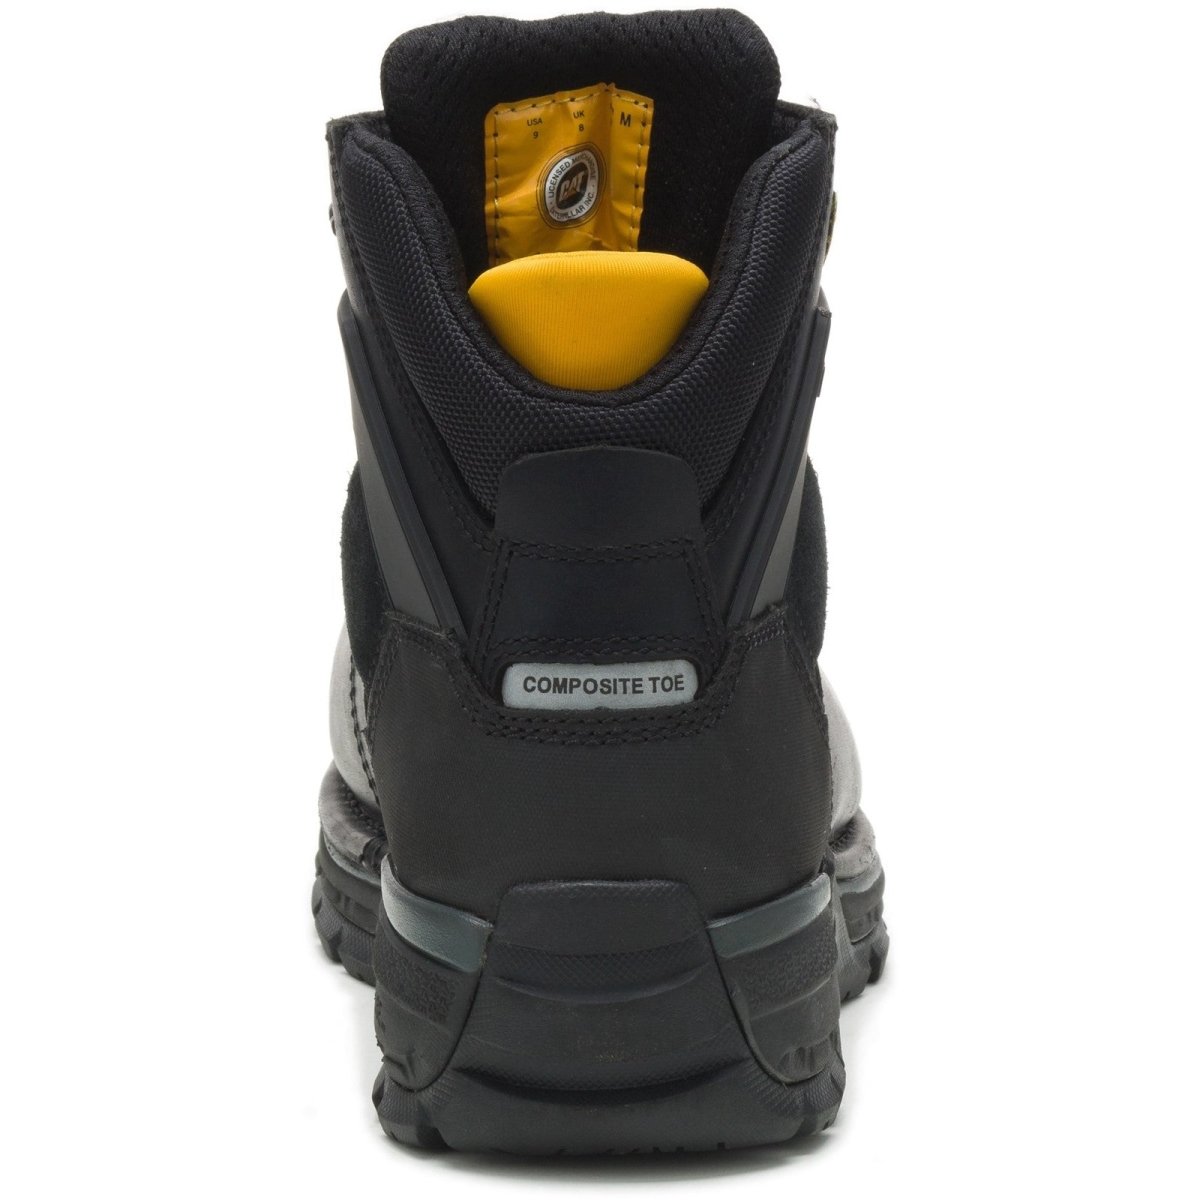 Caterpillar Excavator Waterproof Mens Safety Hiker Boots - Shoe Store Direct